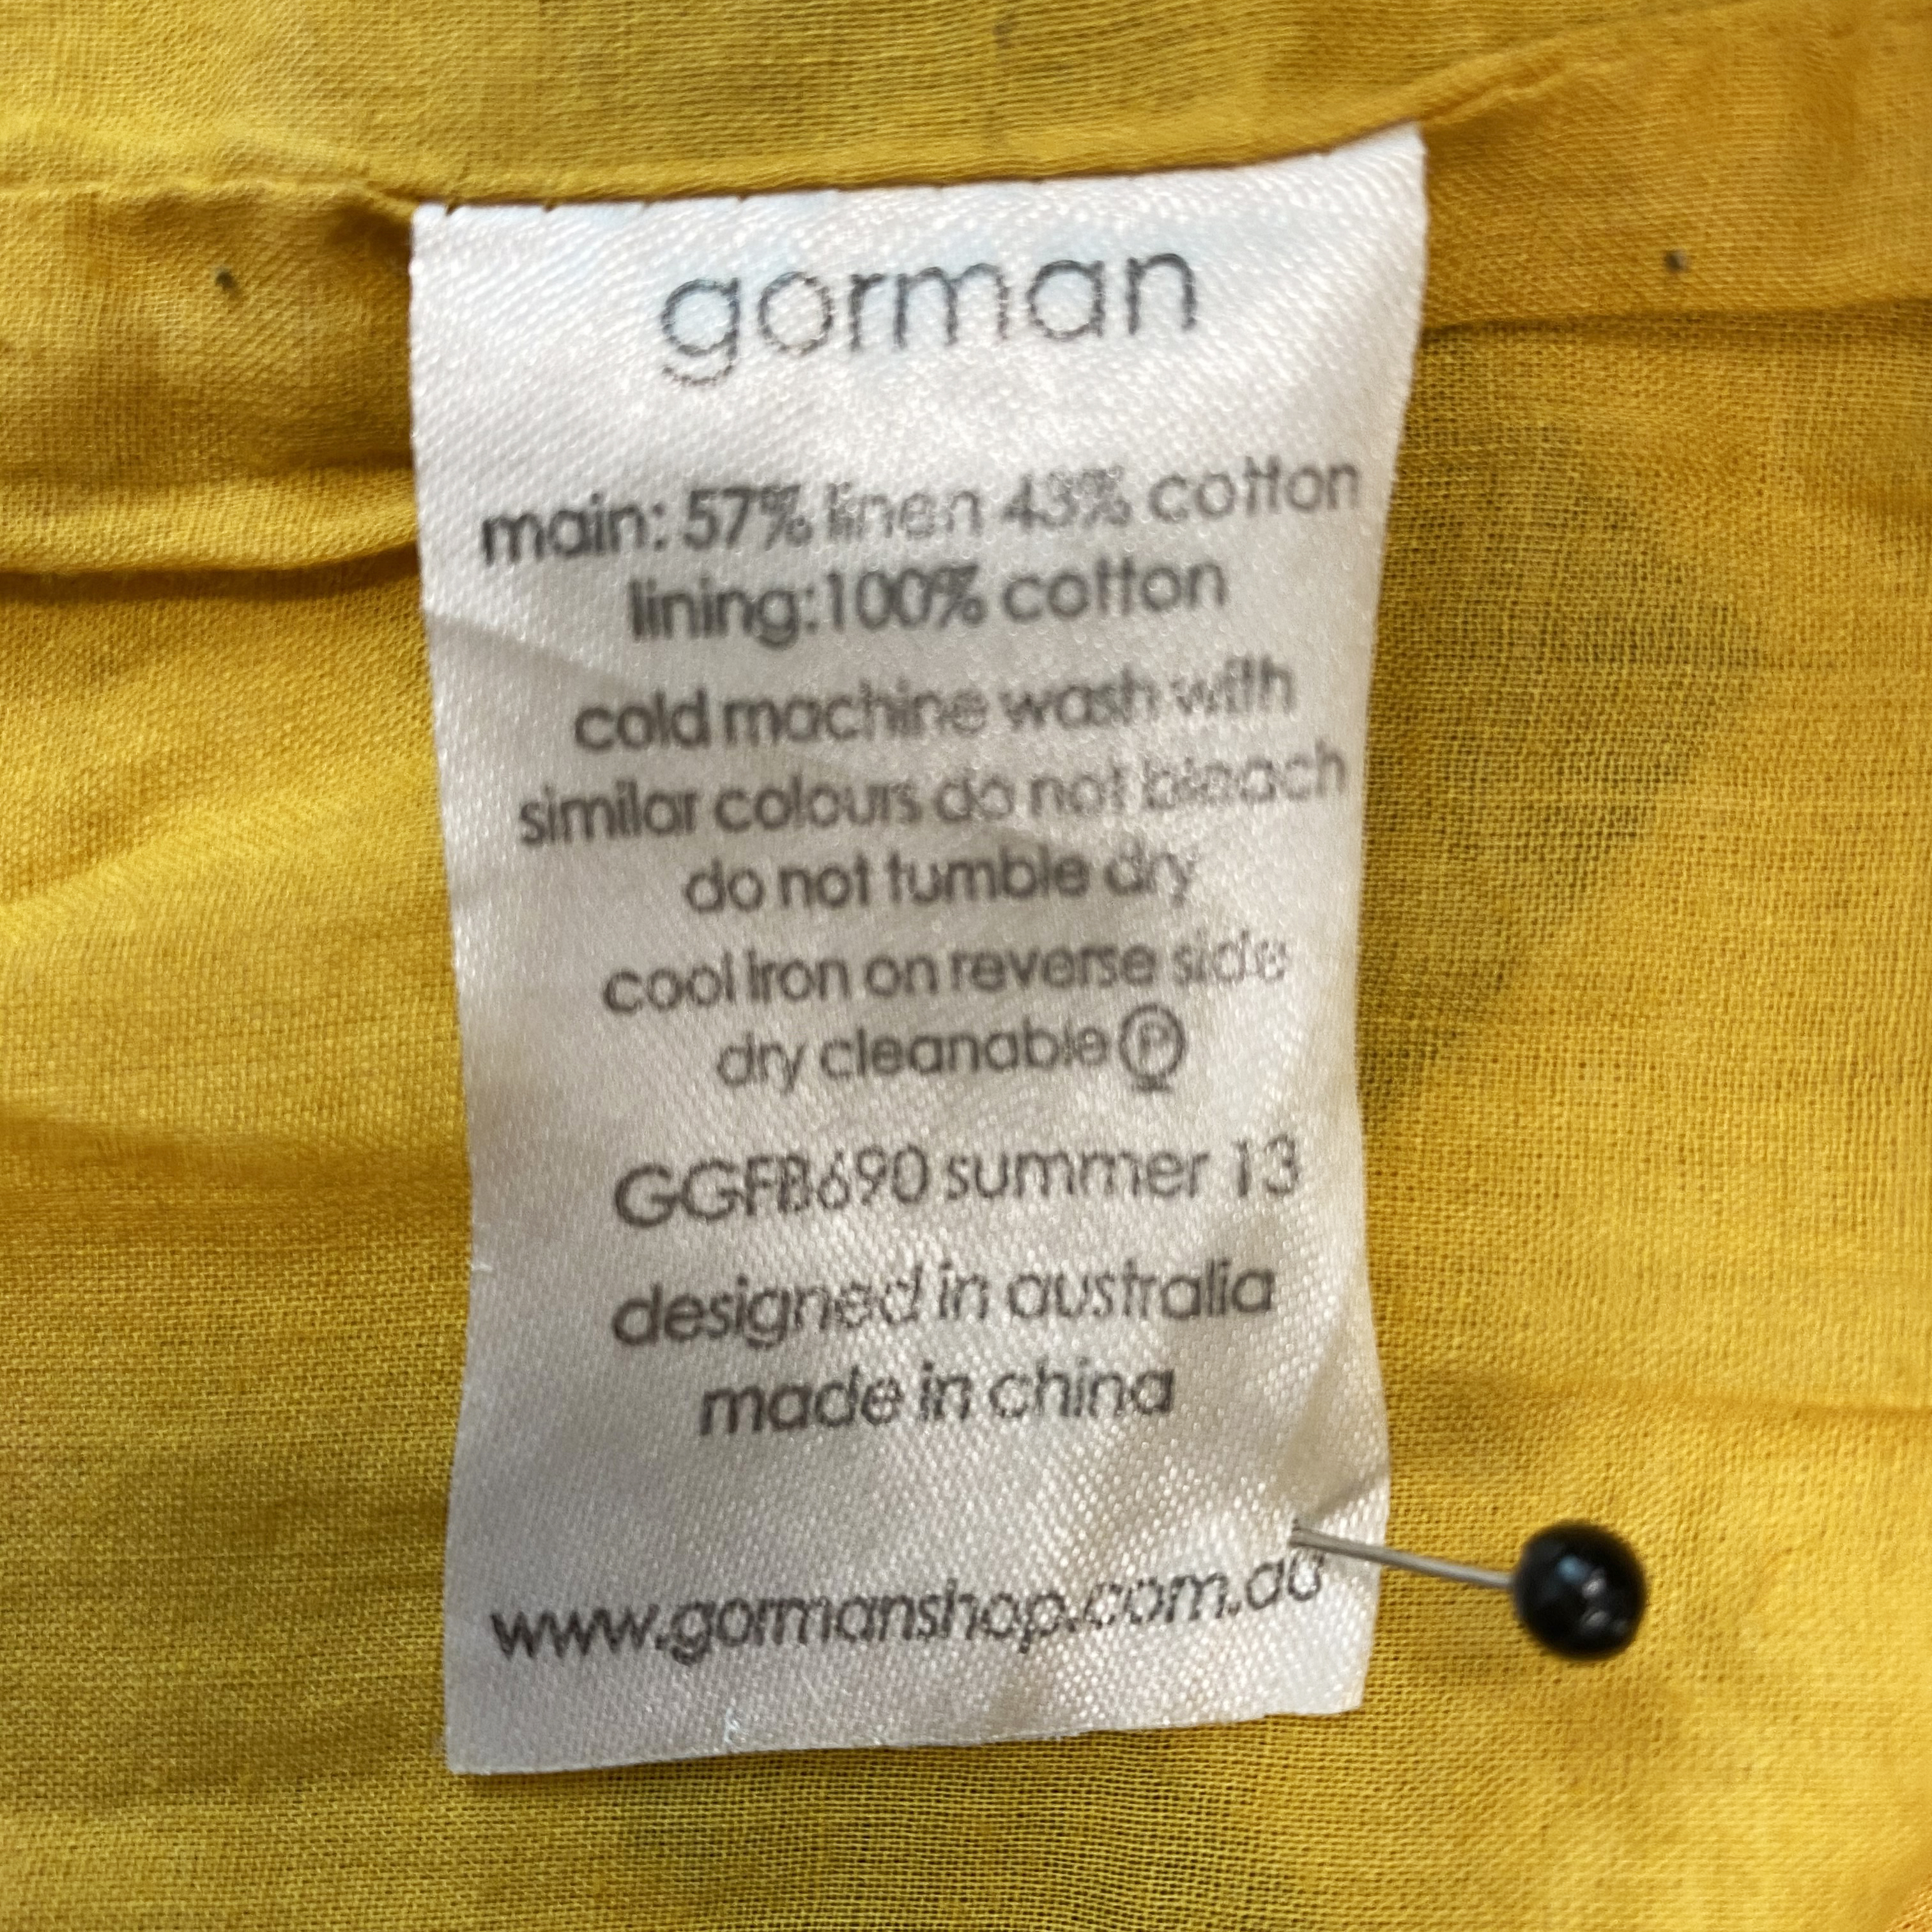 Gorman Mustard Patterned Mini Skirt